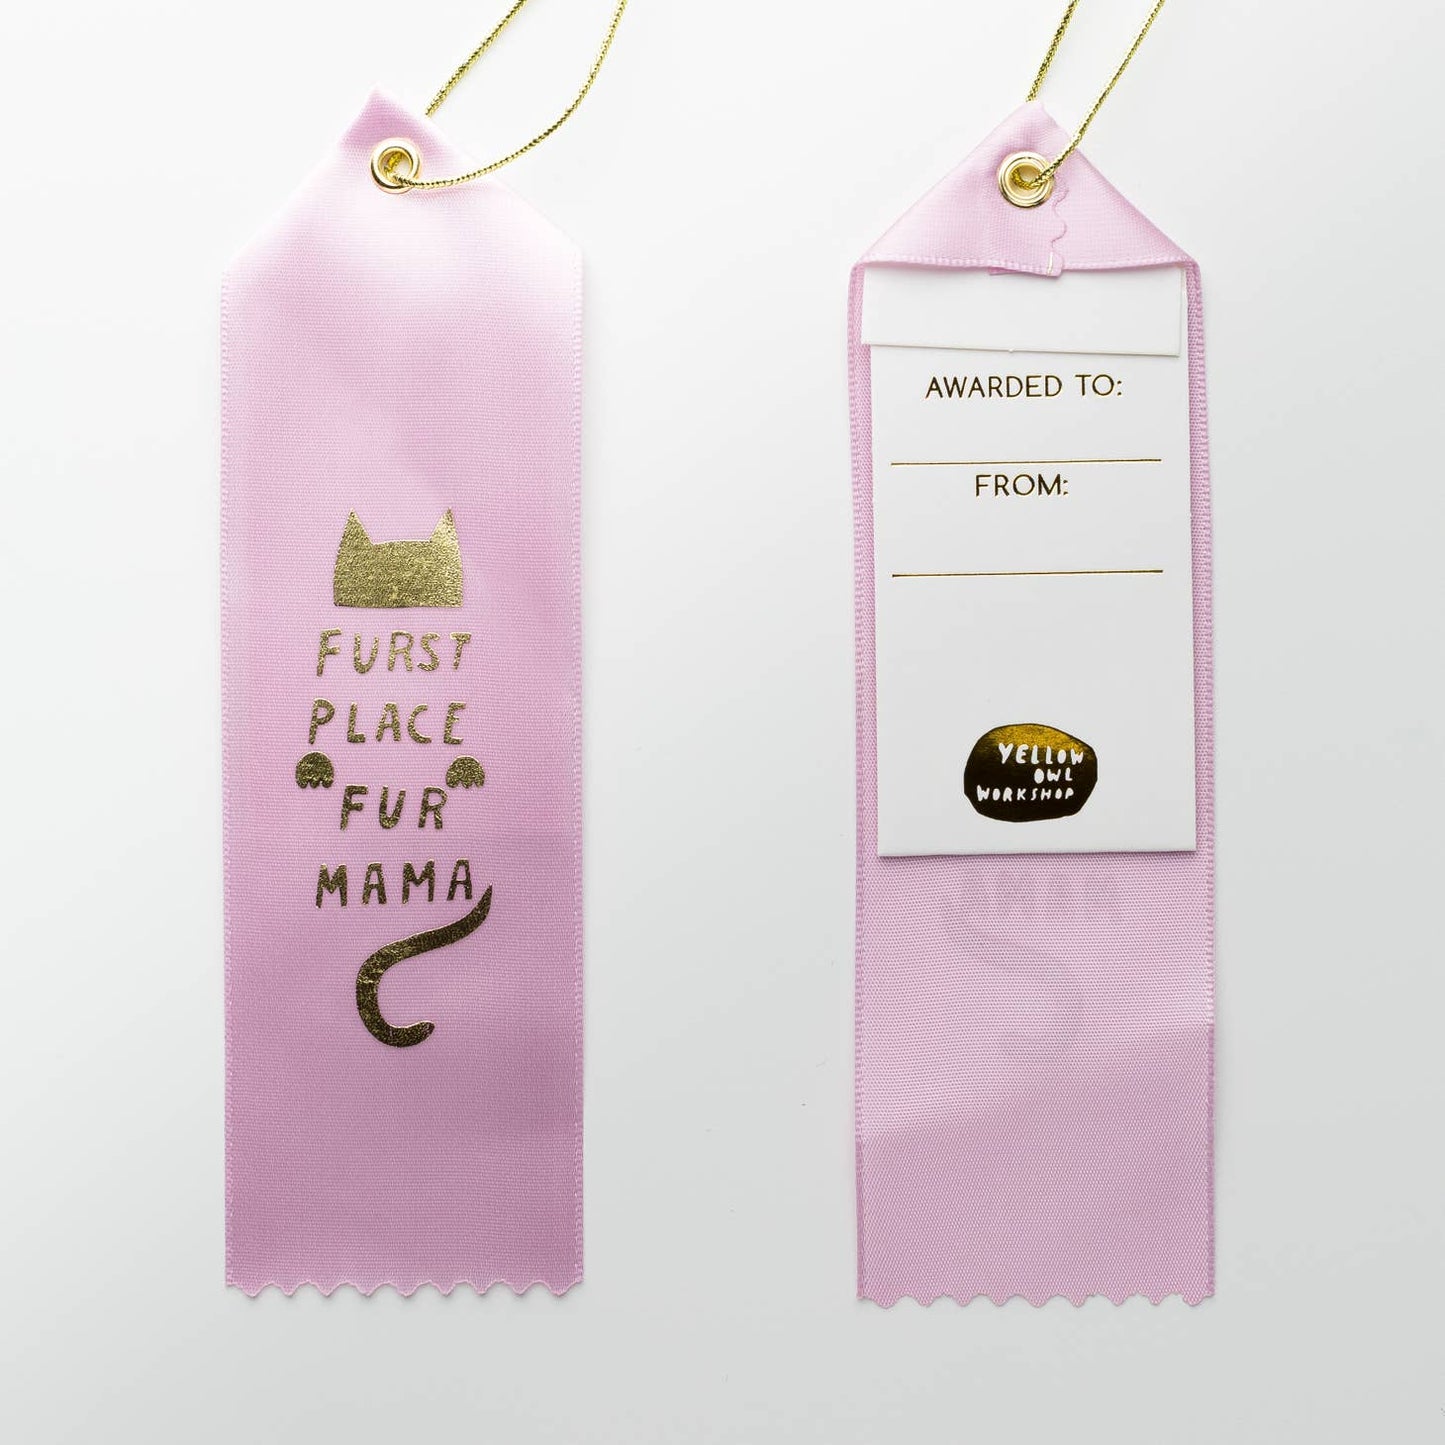 Furst Place Fur Mama Award Ribbon